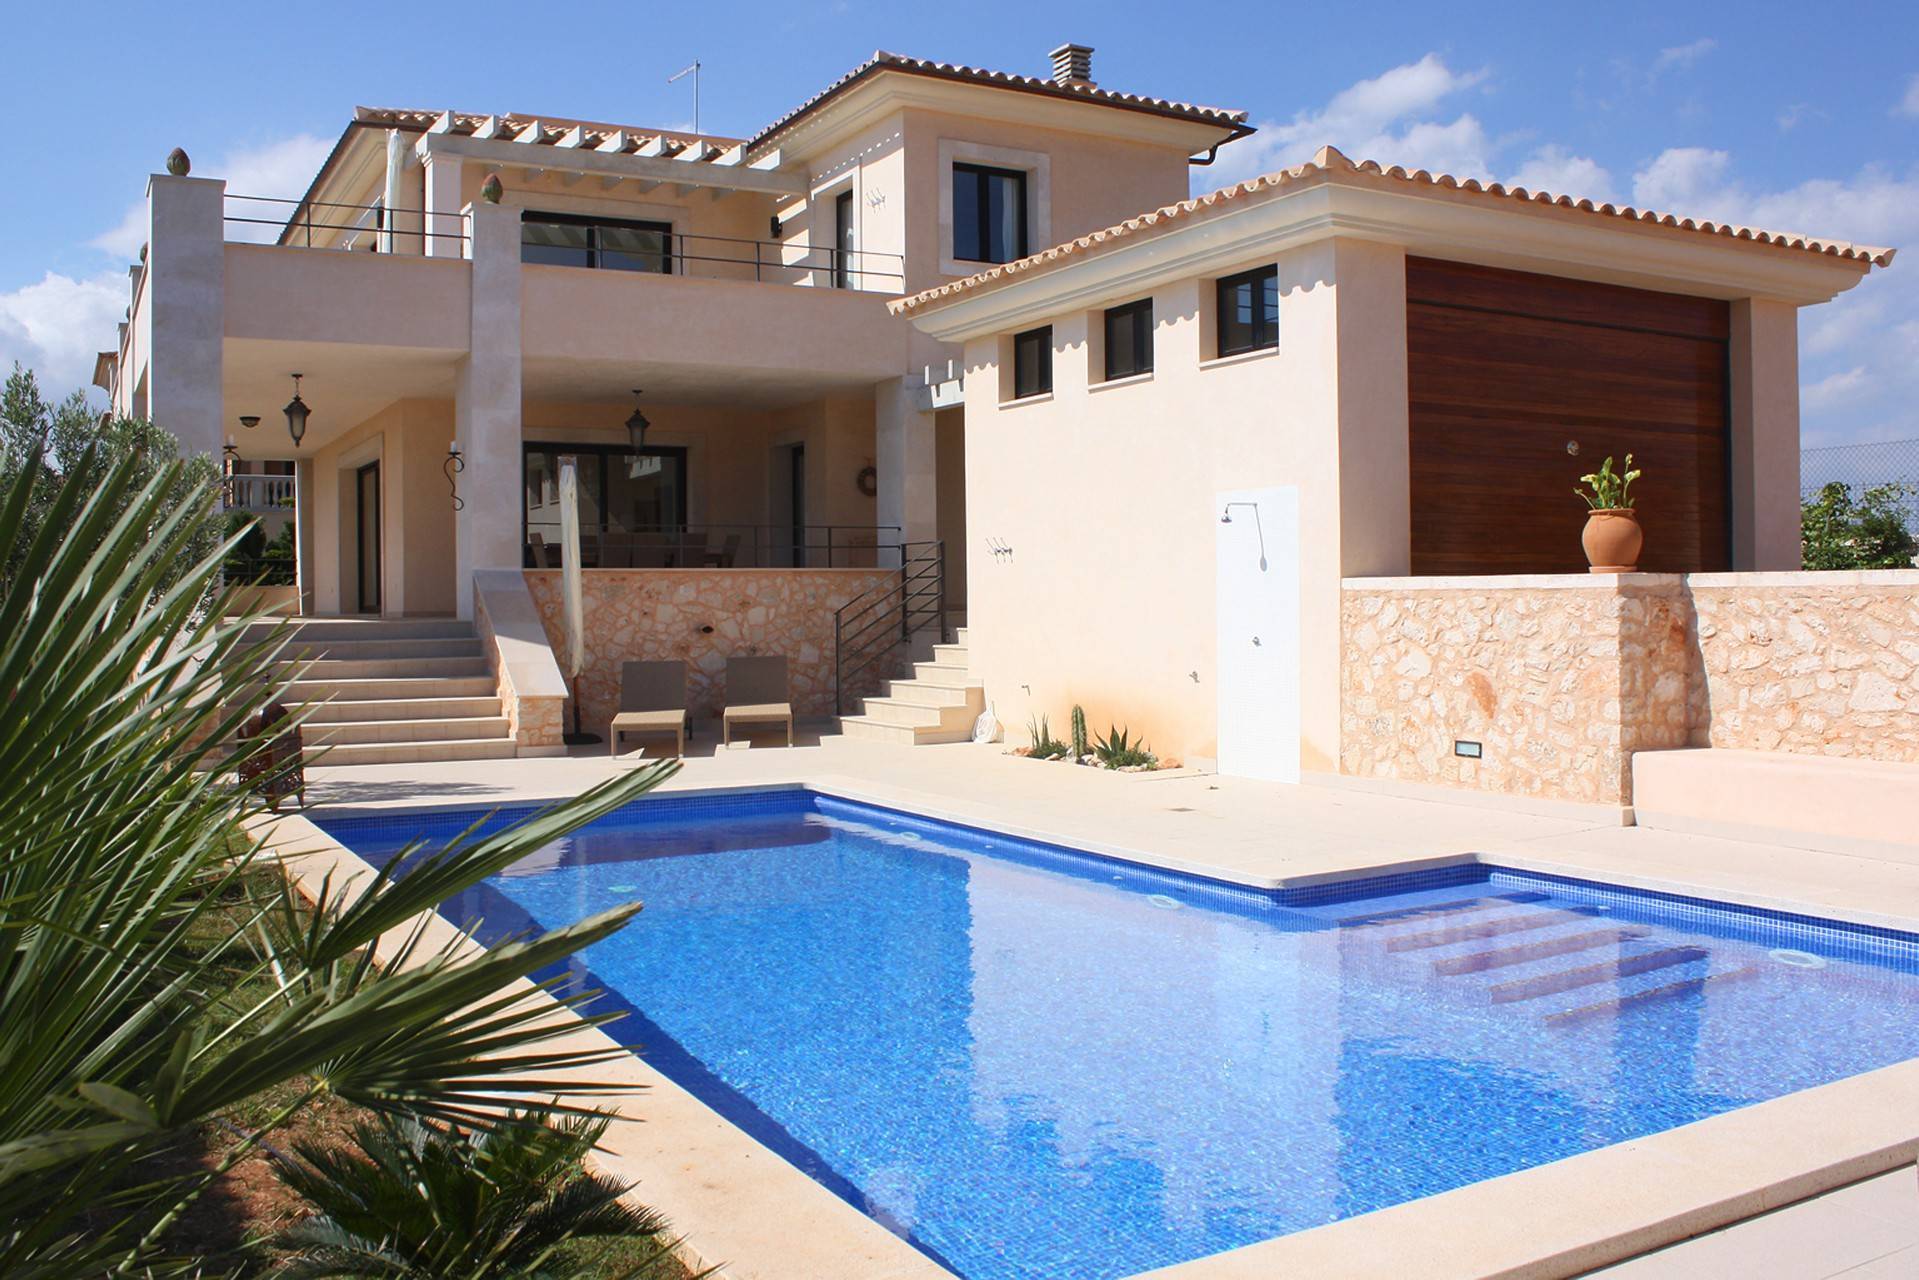 01-29 Luxury holiday home Mallorca south Bild 1